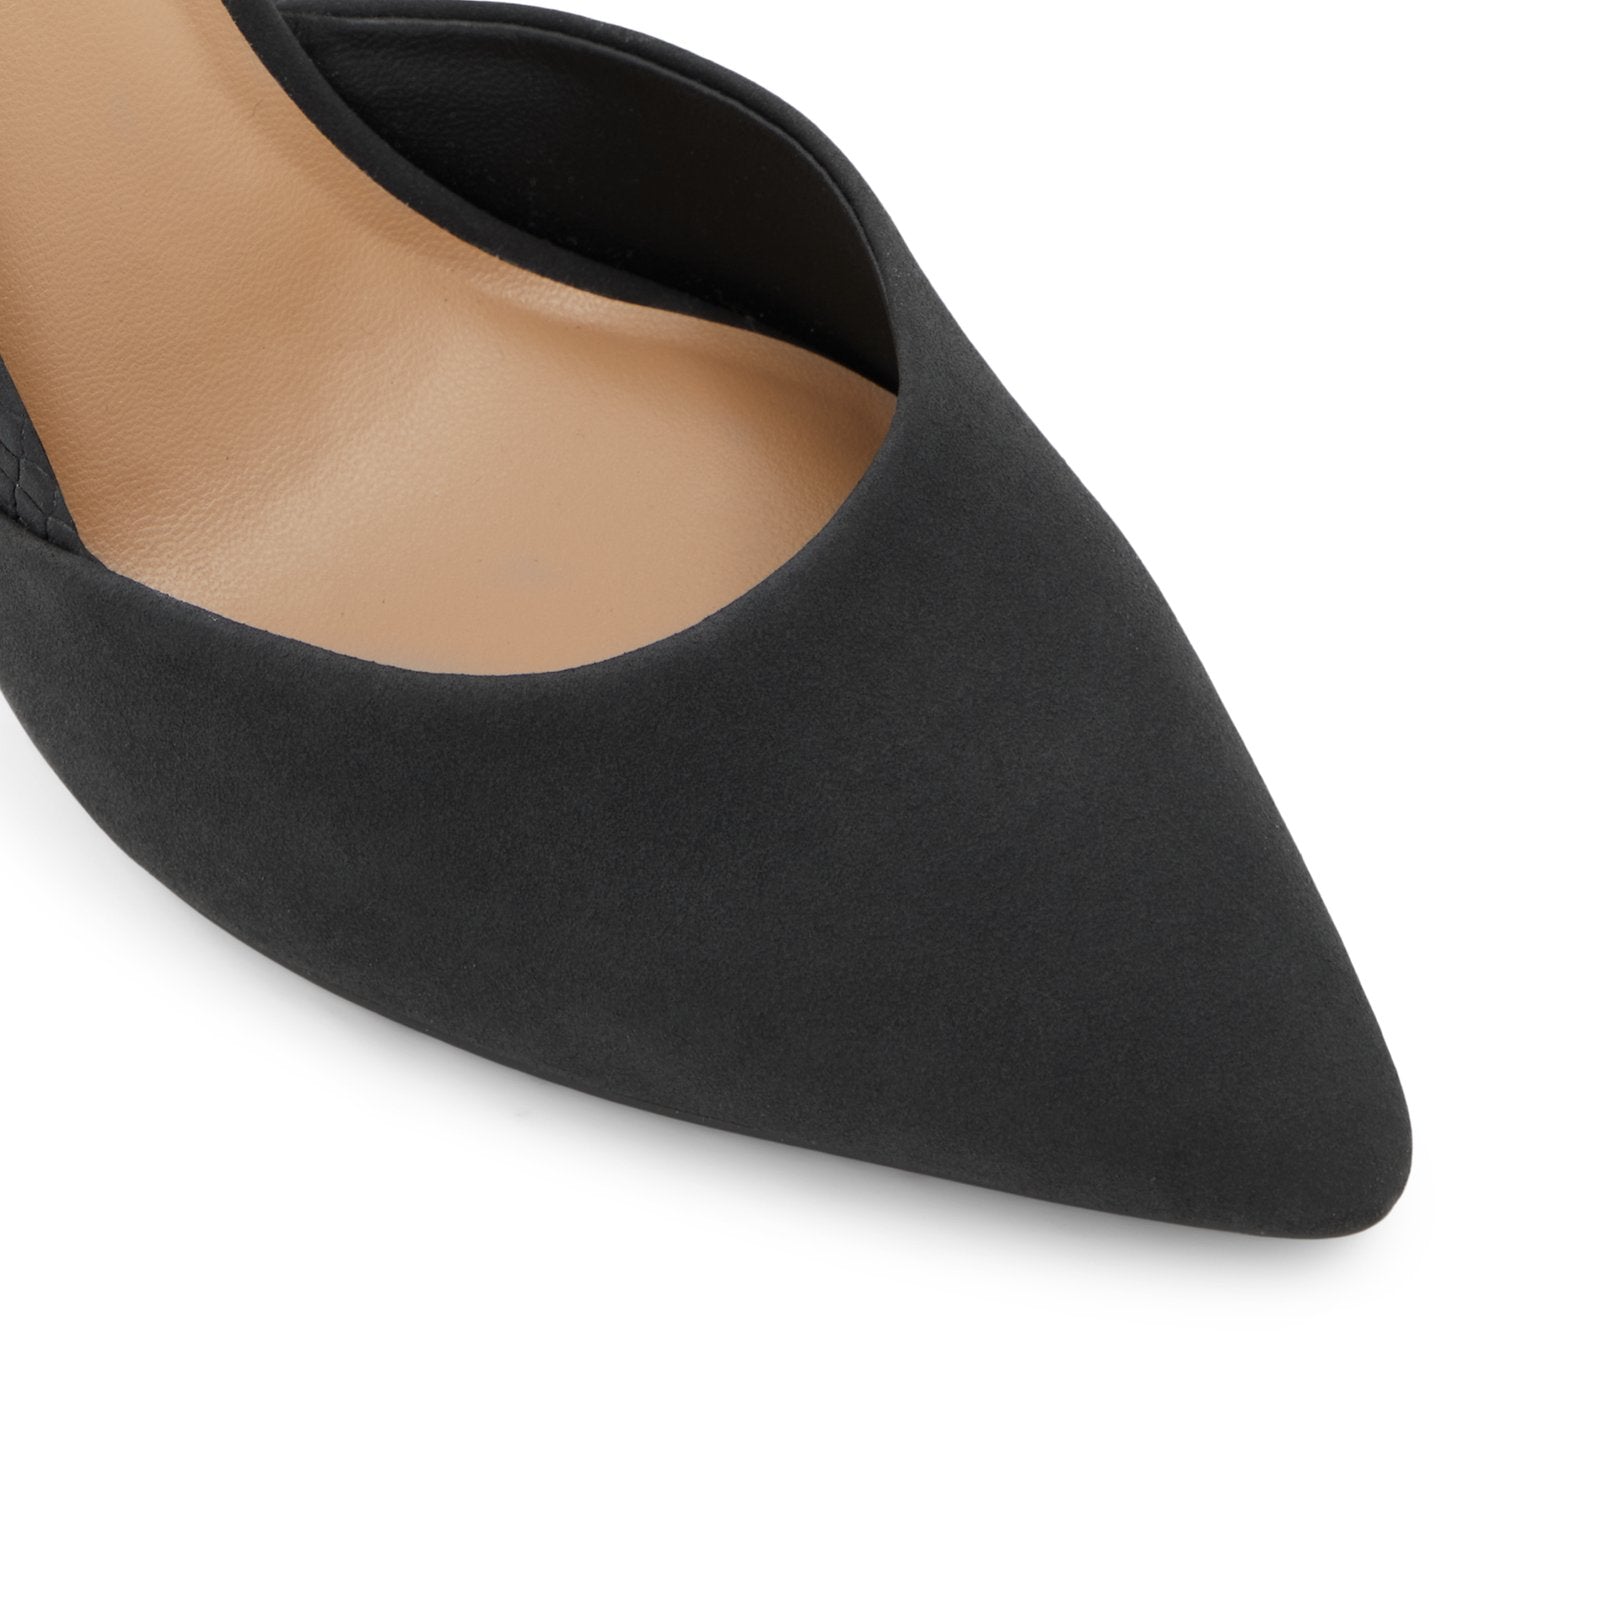 Ariaa Women Shoes - Black - CALL IT SPRING KSA